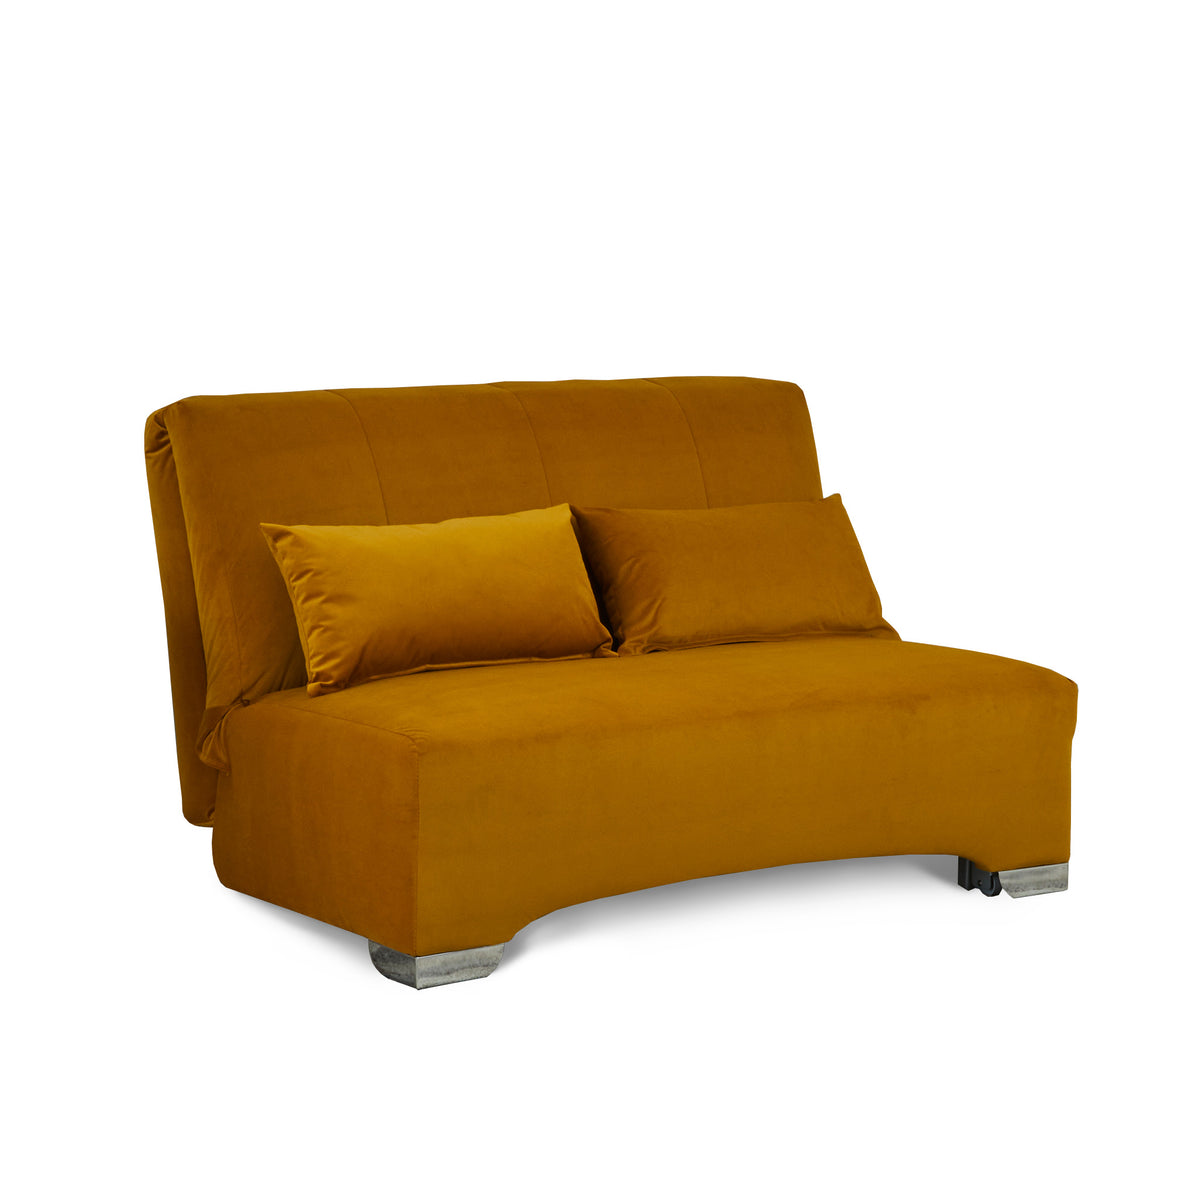 Cortez Mustard Velvet Upholstered Pull Out Sofa Bed from Roseland Furniture